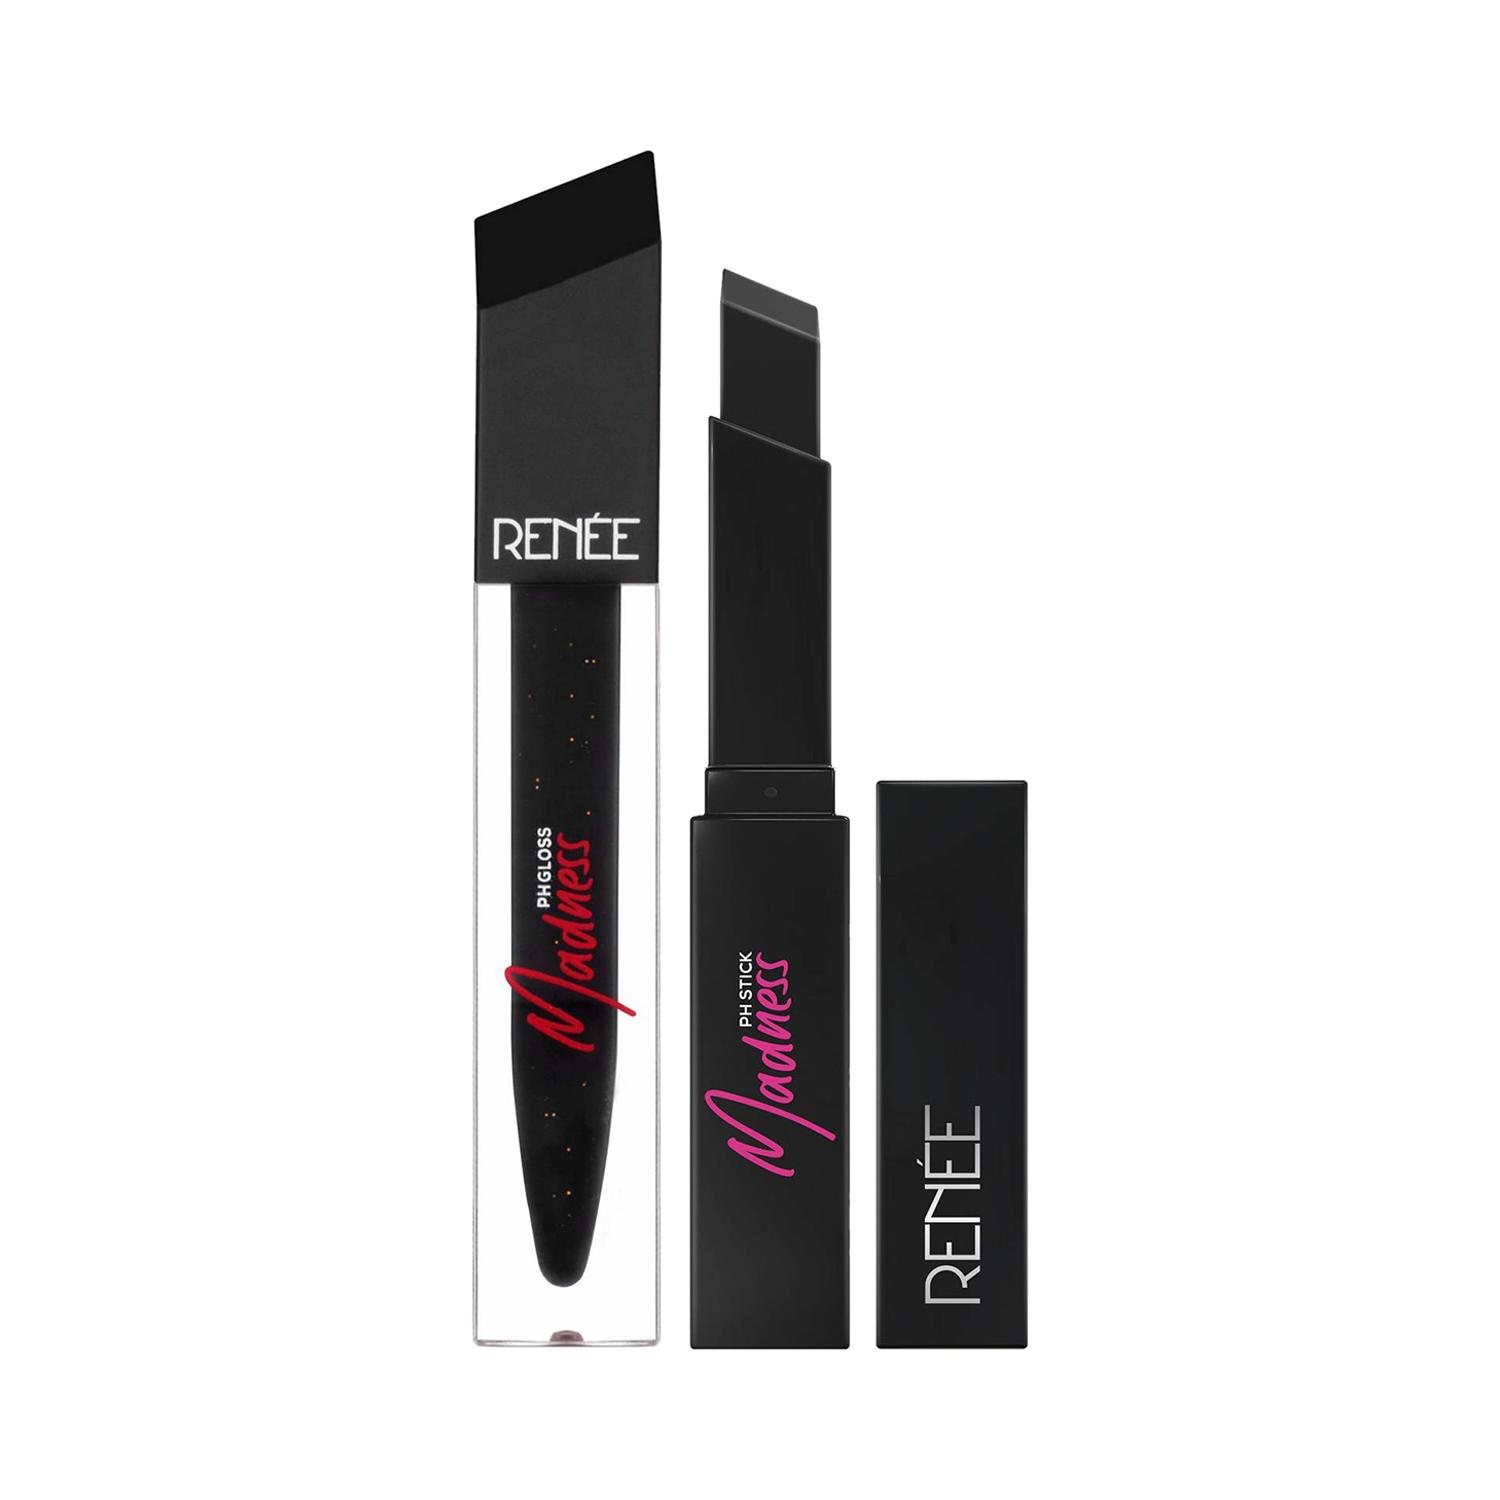 RENEE | RENEE Madness Makeup Kit Combo - PH Stick + PH Lip Gloss, Pink Pay Off